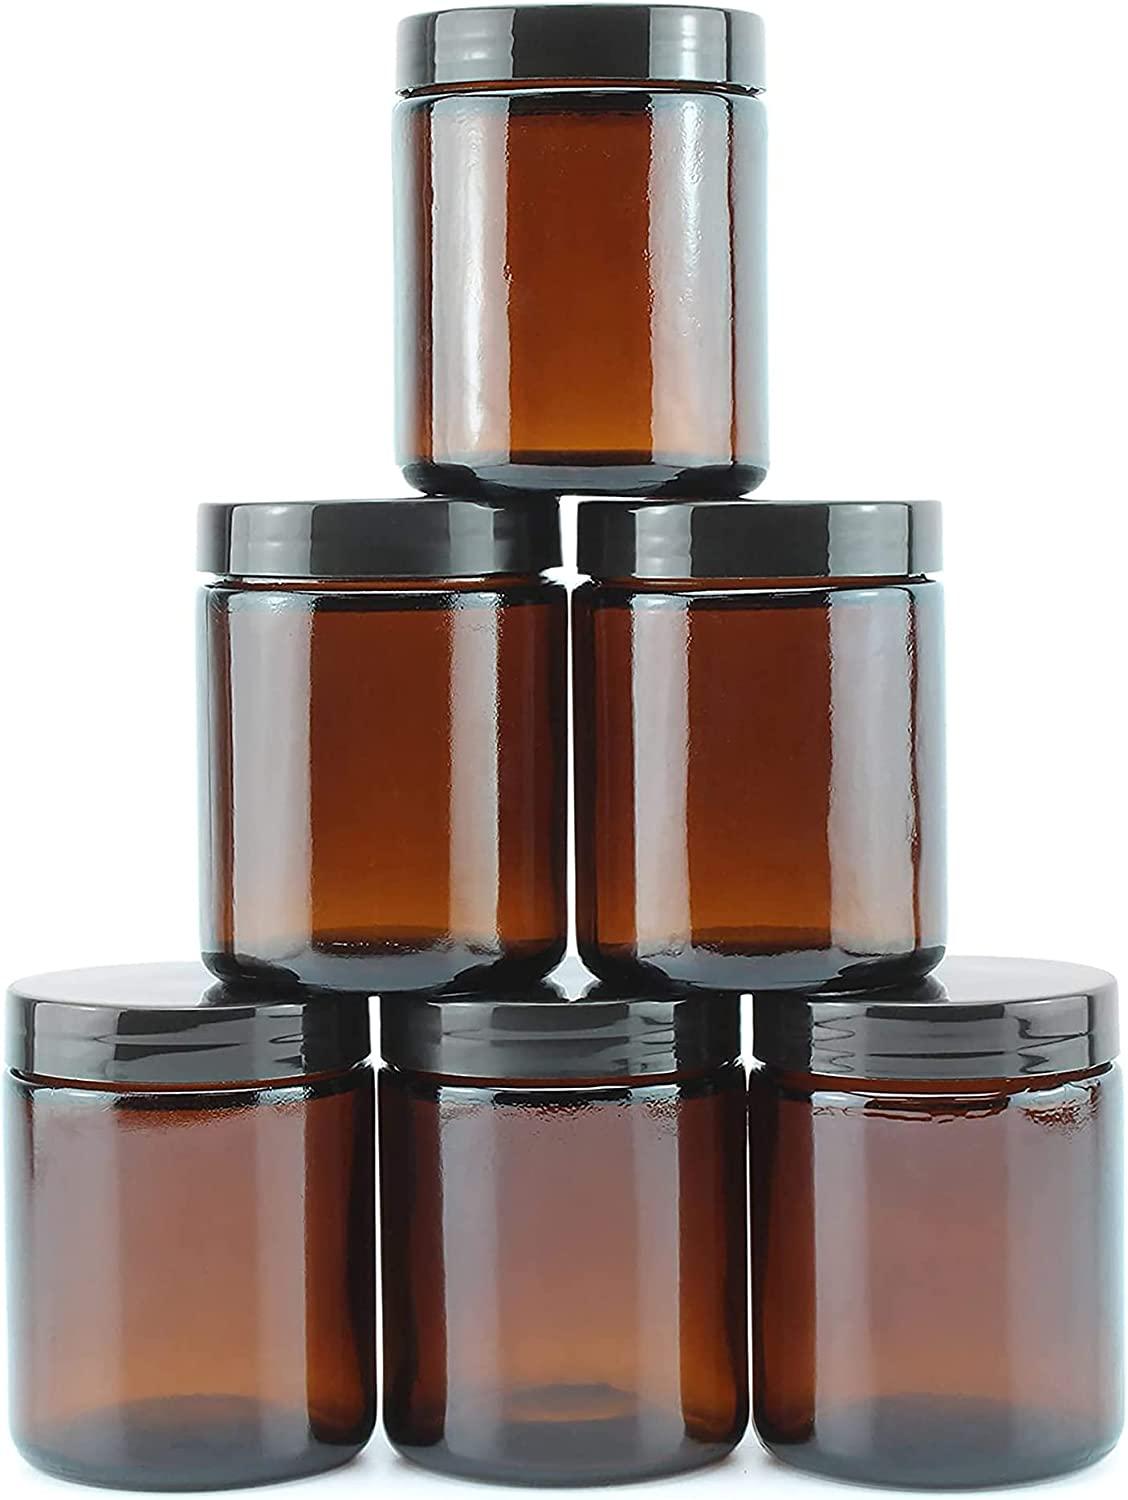 Cornucopia Brands Cornucopia Amber Glass Mason Jars (6-Pack, Pint Size) 16oz Colored Glass Canning and Apothecary Jars